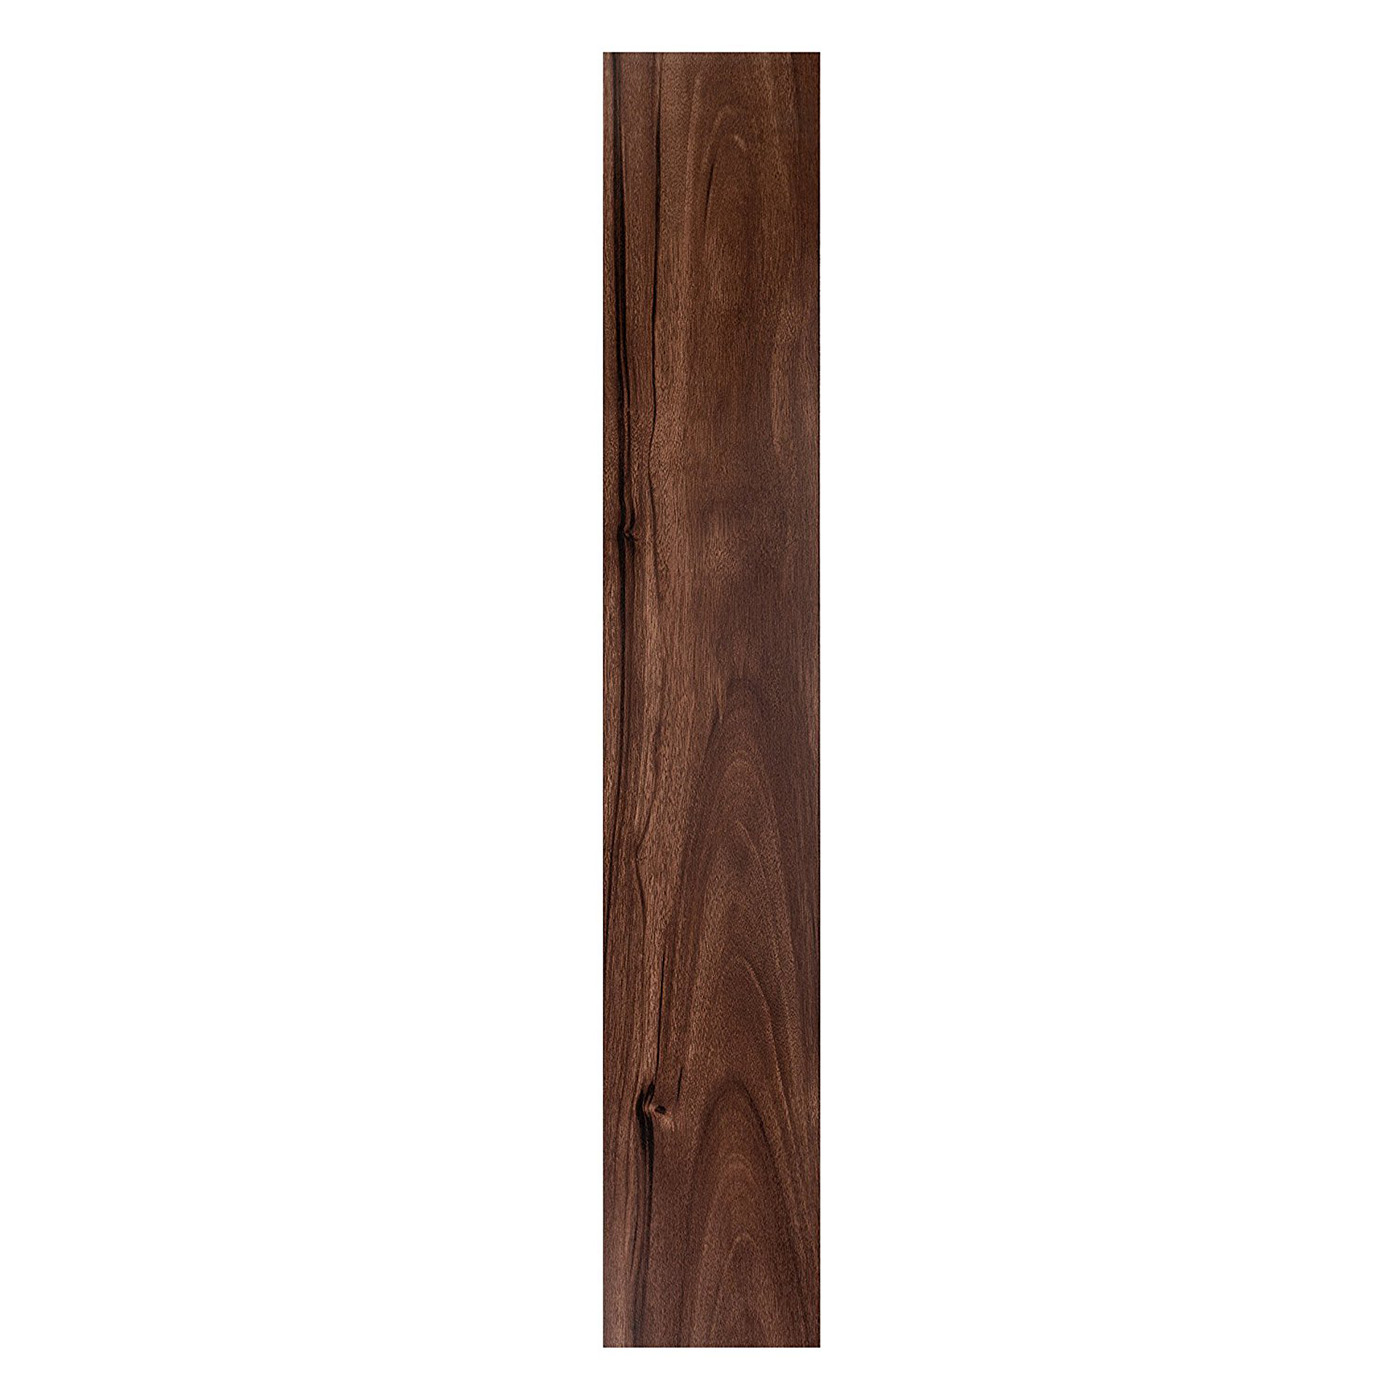 Creative Home Floor Planks Do it Yourself Peel N' Stick Vinyl Wood Look Planks (6" x 36", Hickory)